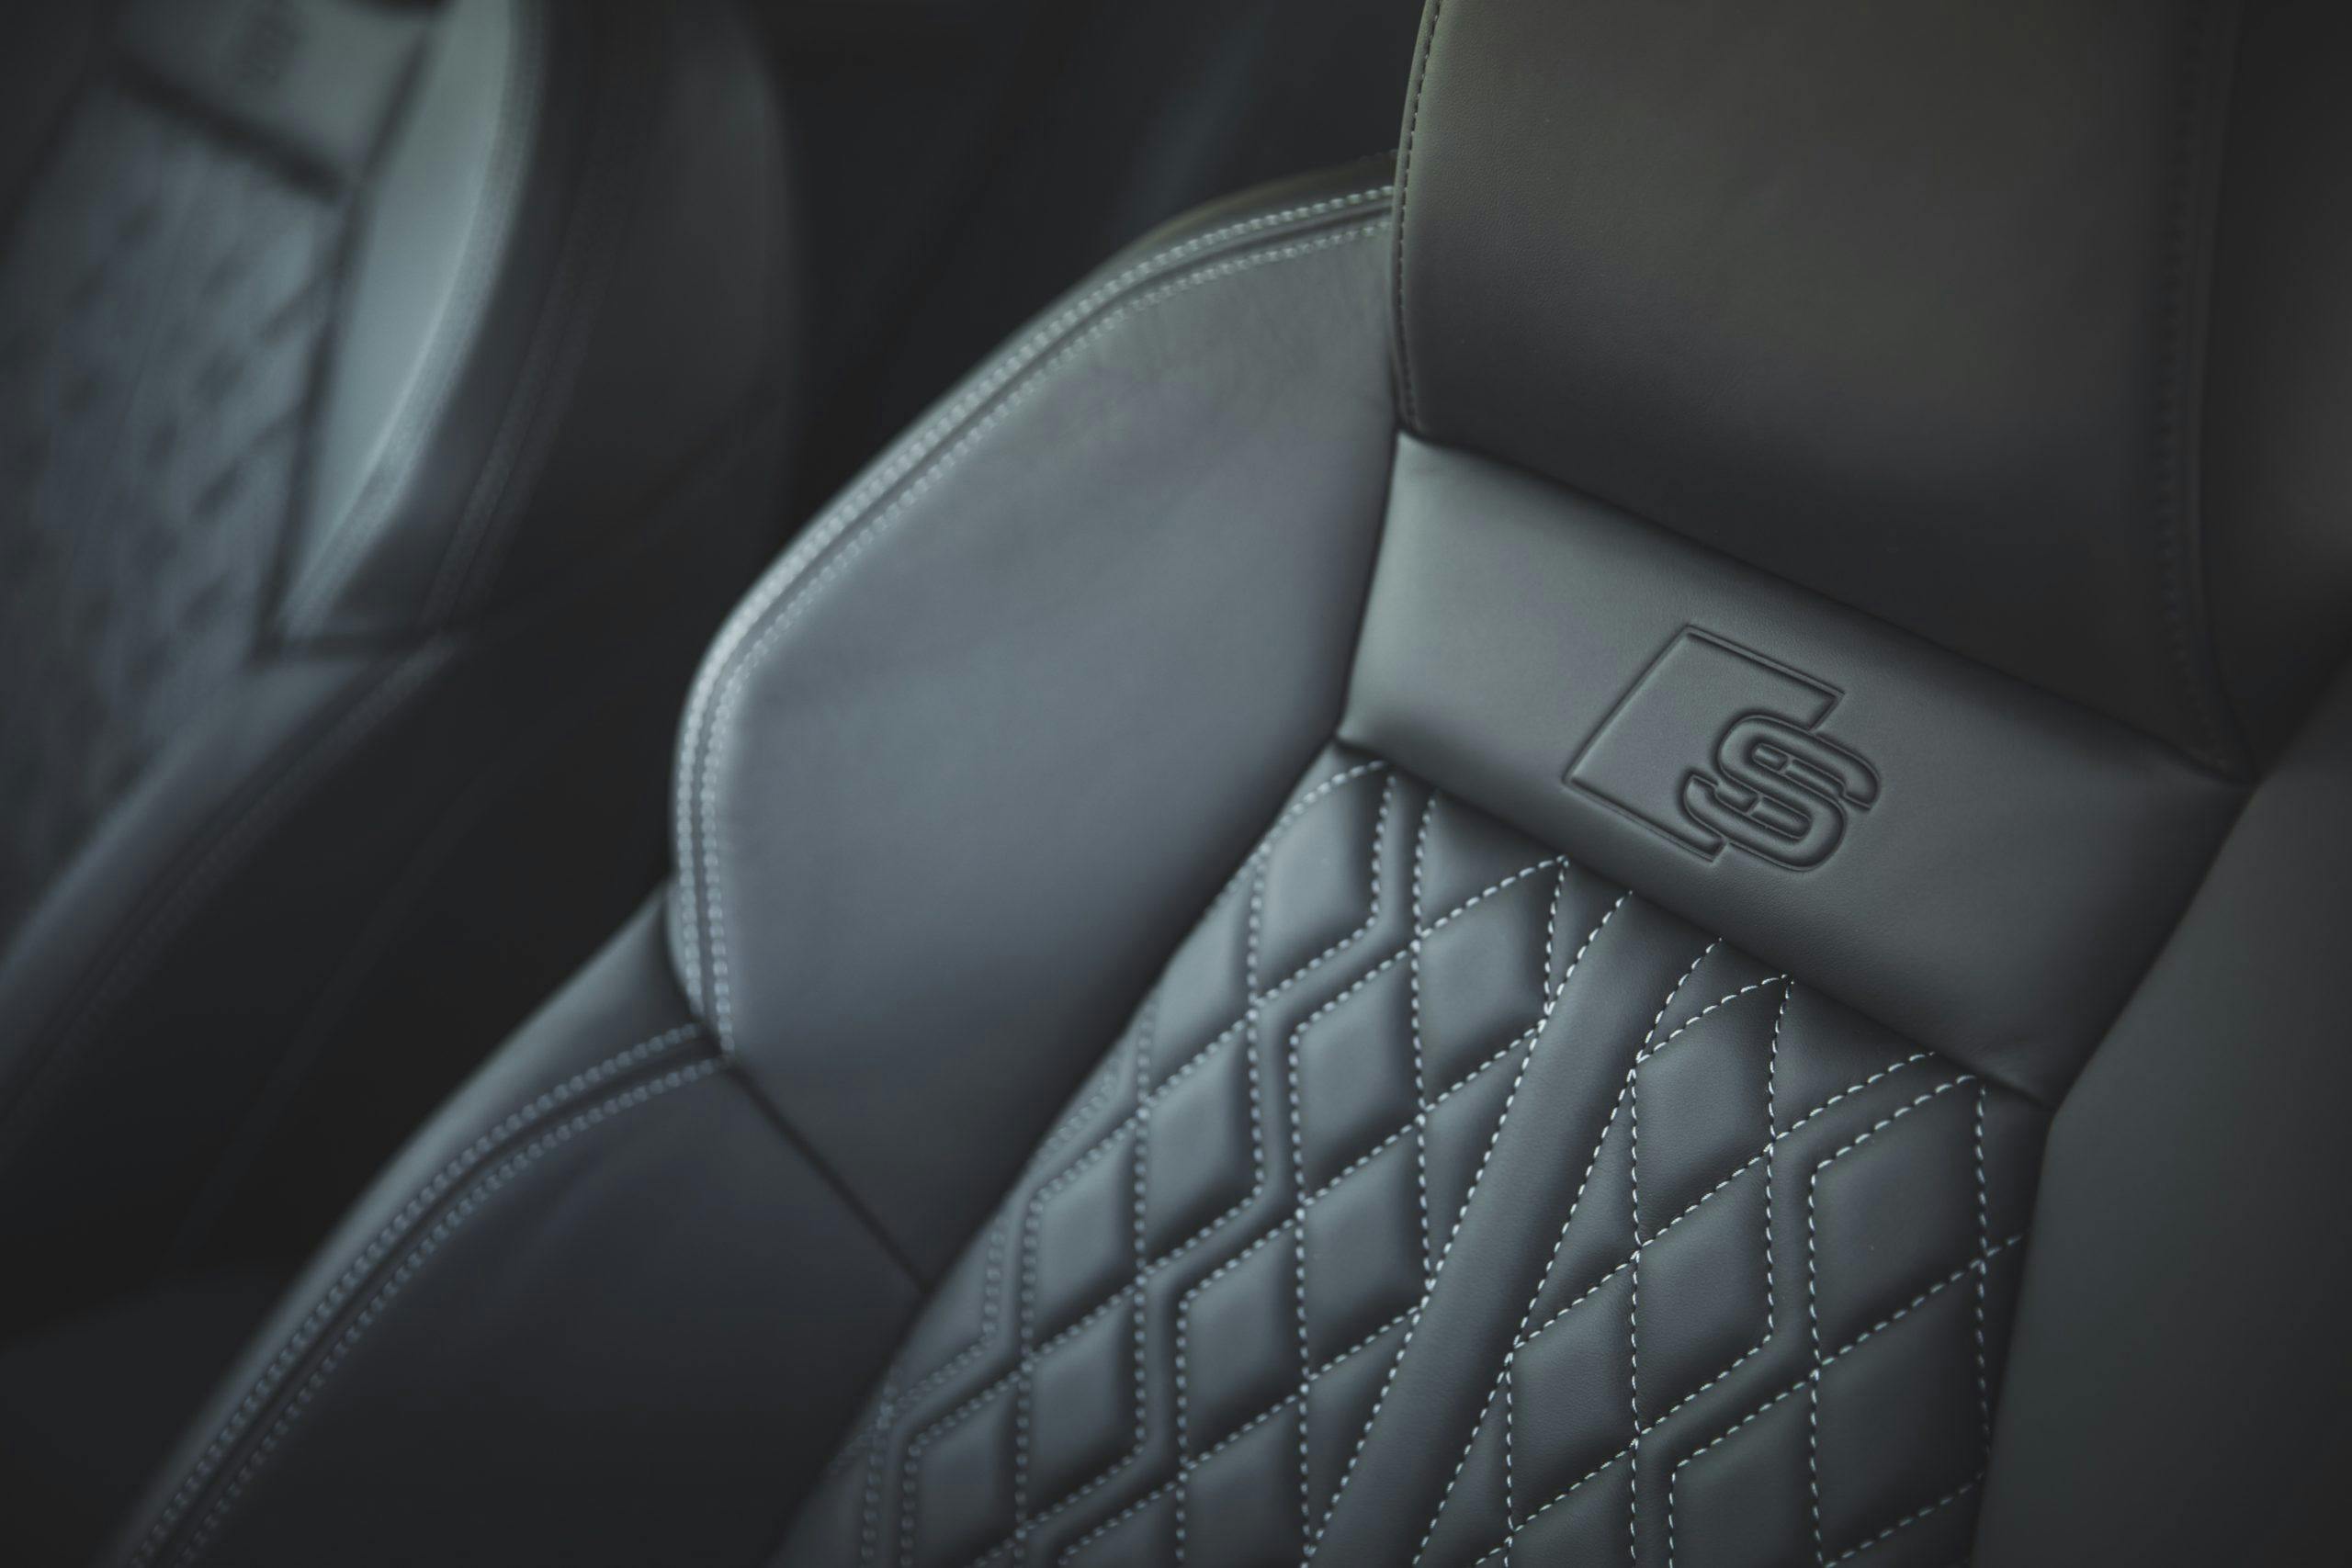 2022 Audi S3 interior leather seat detail